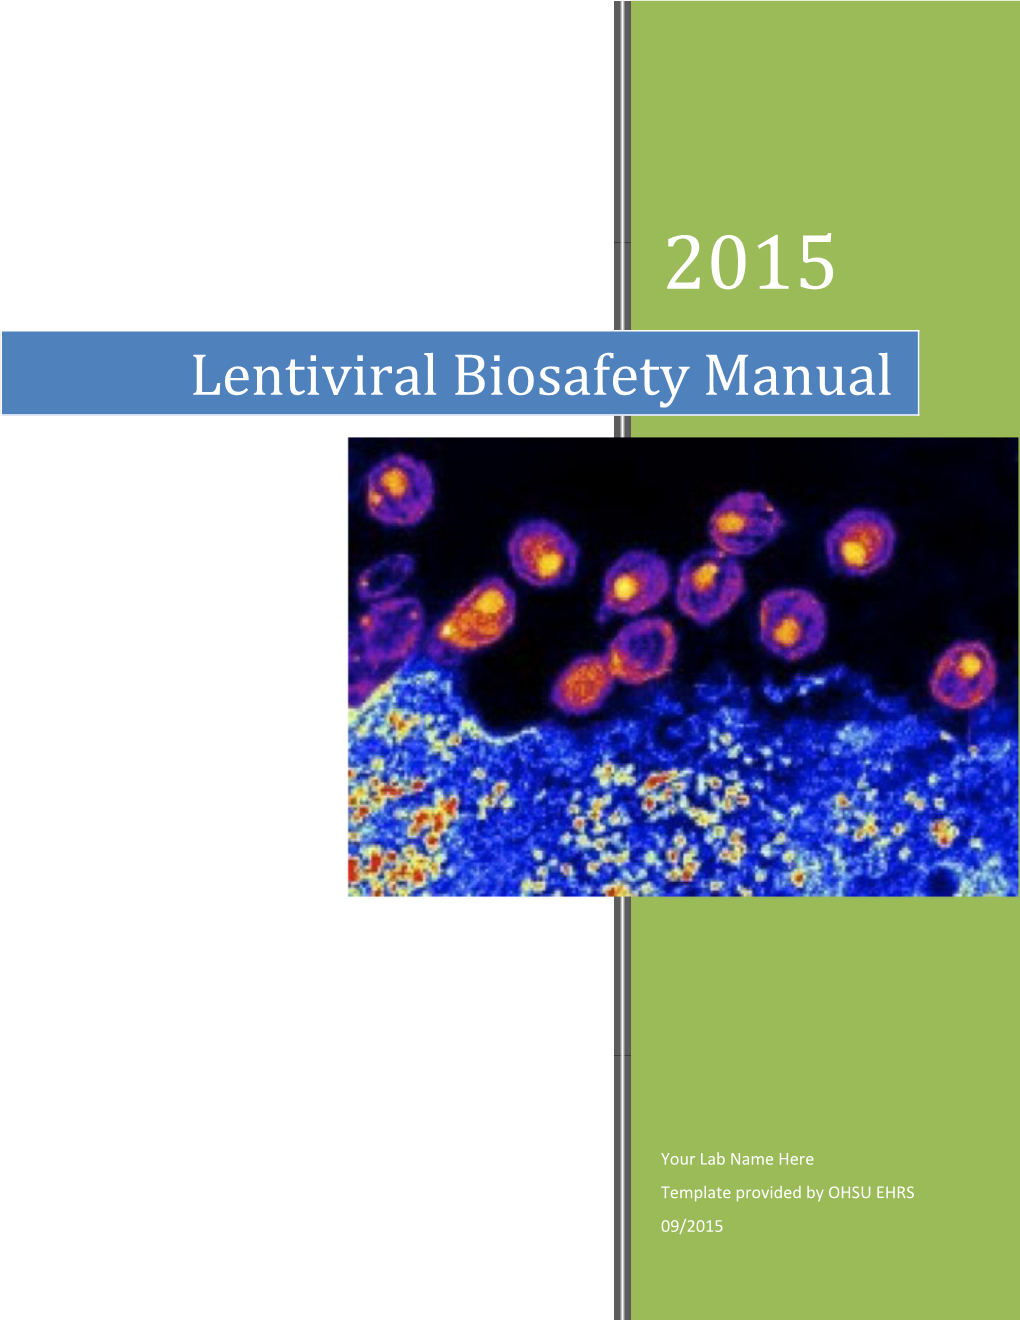 Lentiviral Biosafety Manual